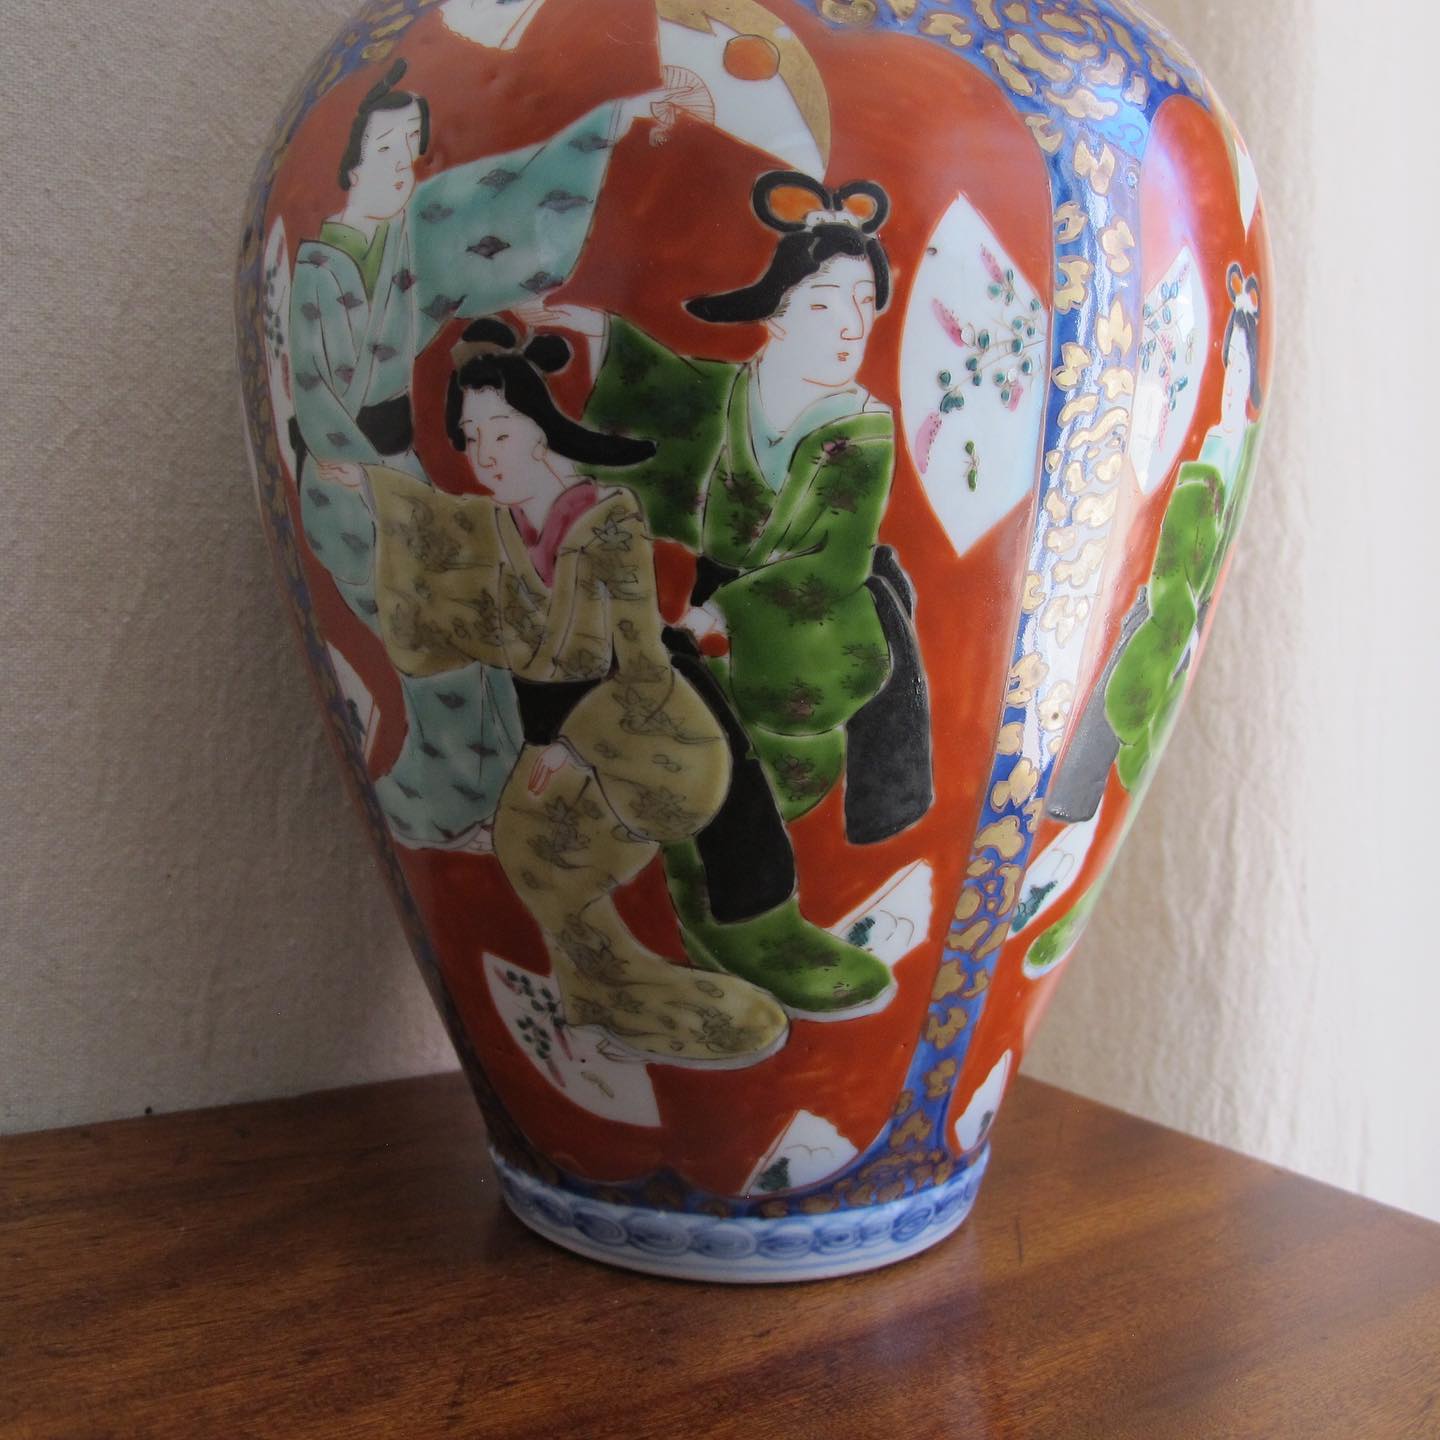 LARGE antique Japanese Imari / Arita ware covered jar, depicting dancers with fans, c. 1860 1880